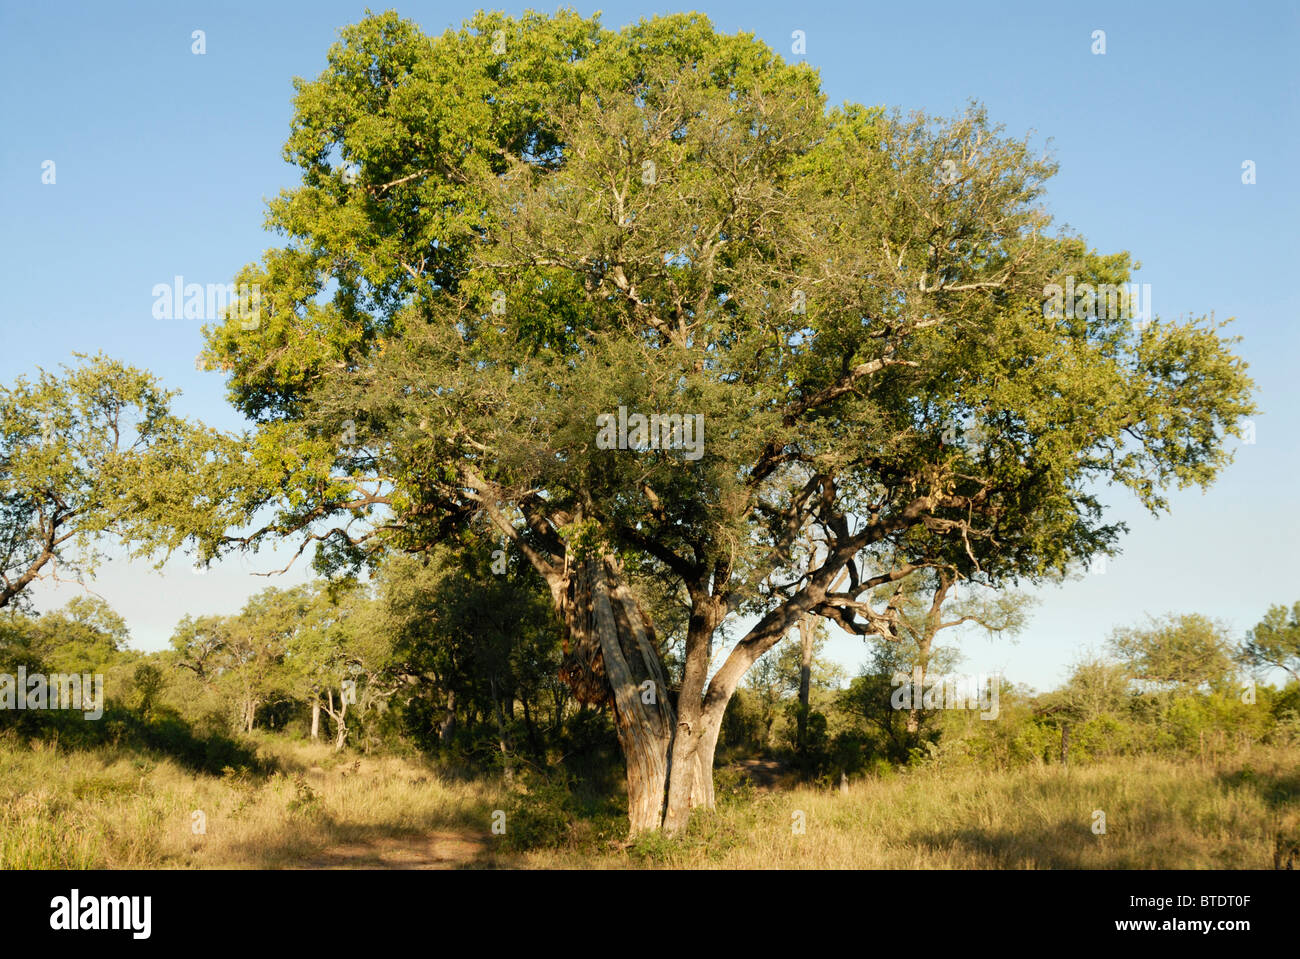 Scenic view of large strangler fig tree Stock Photo